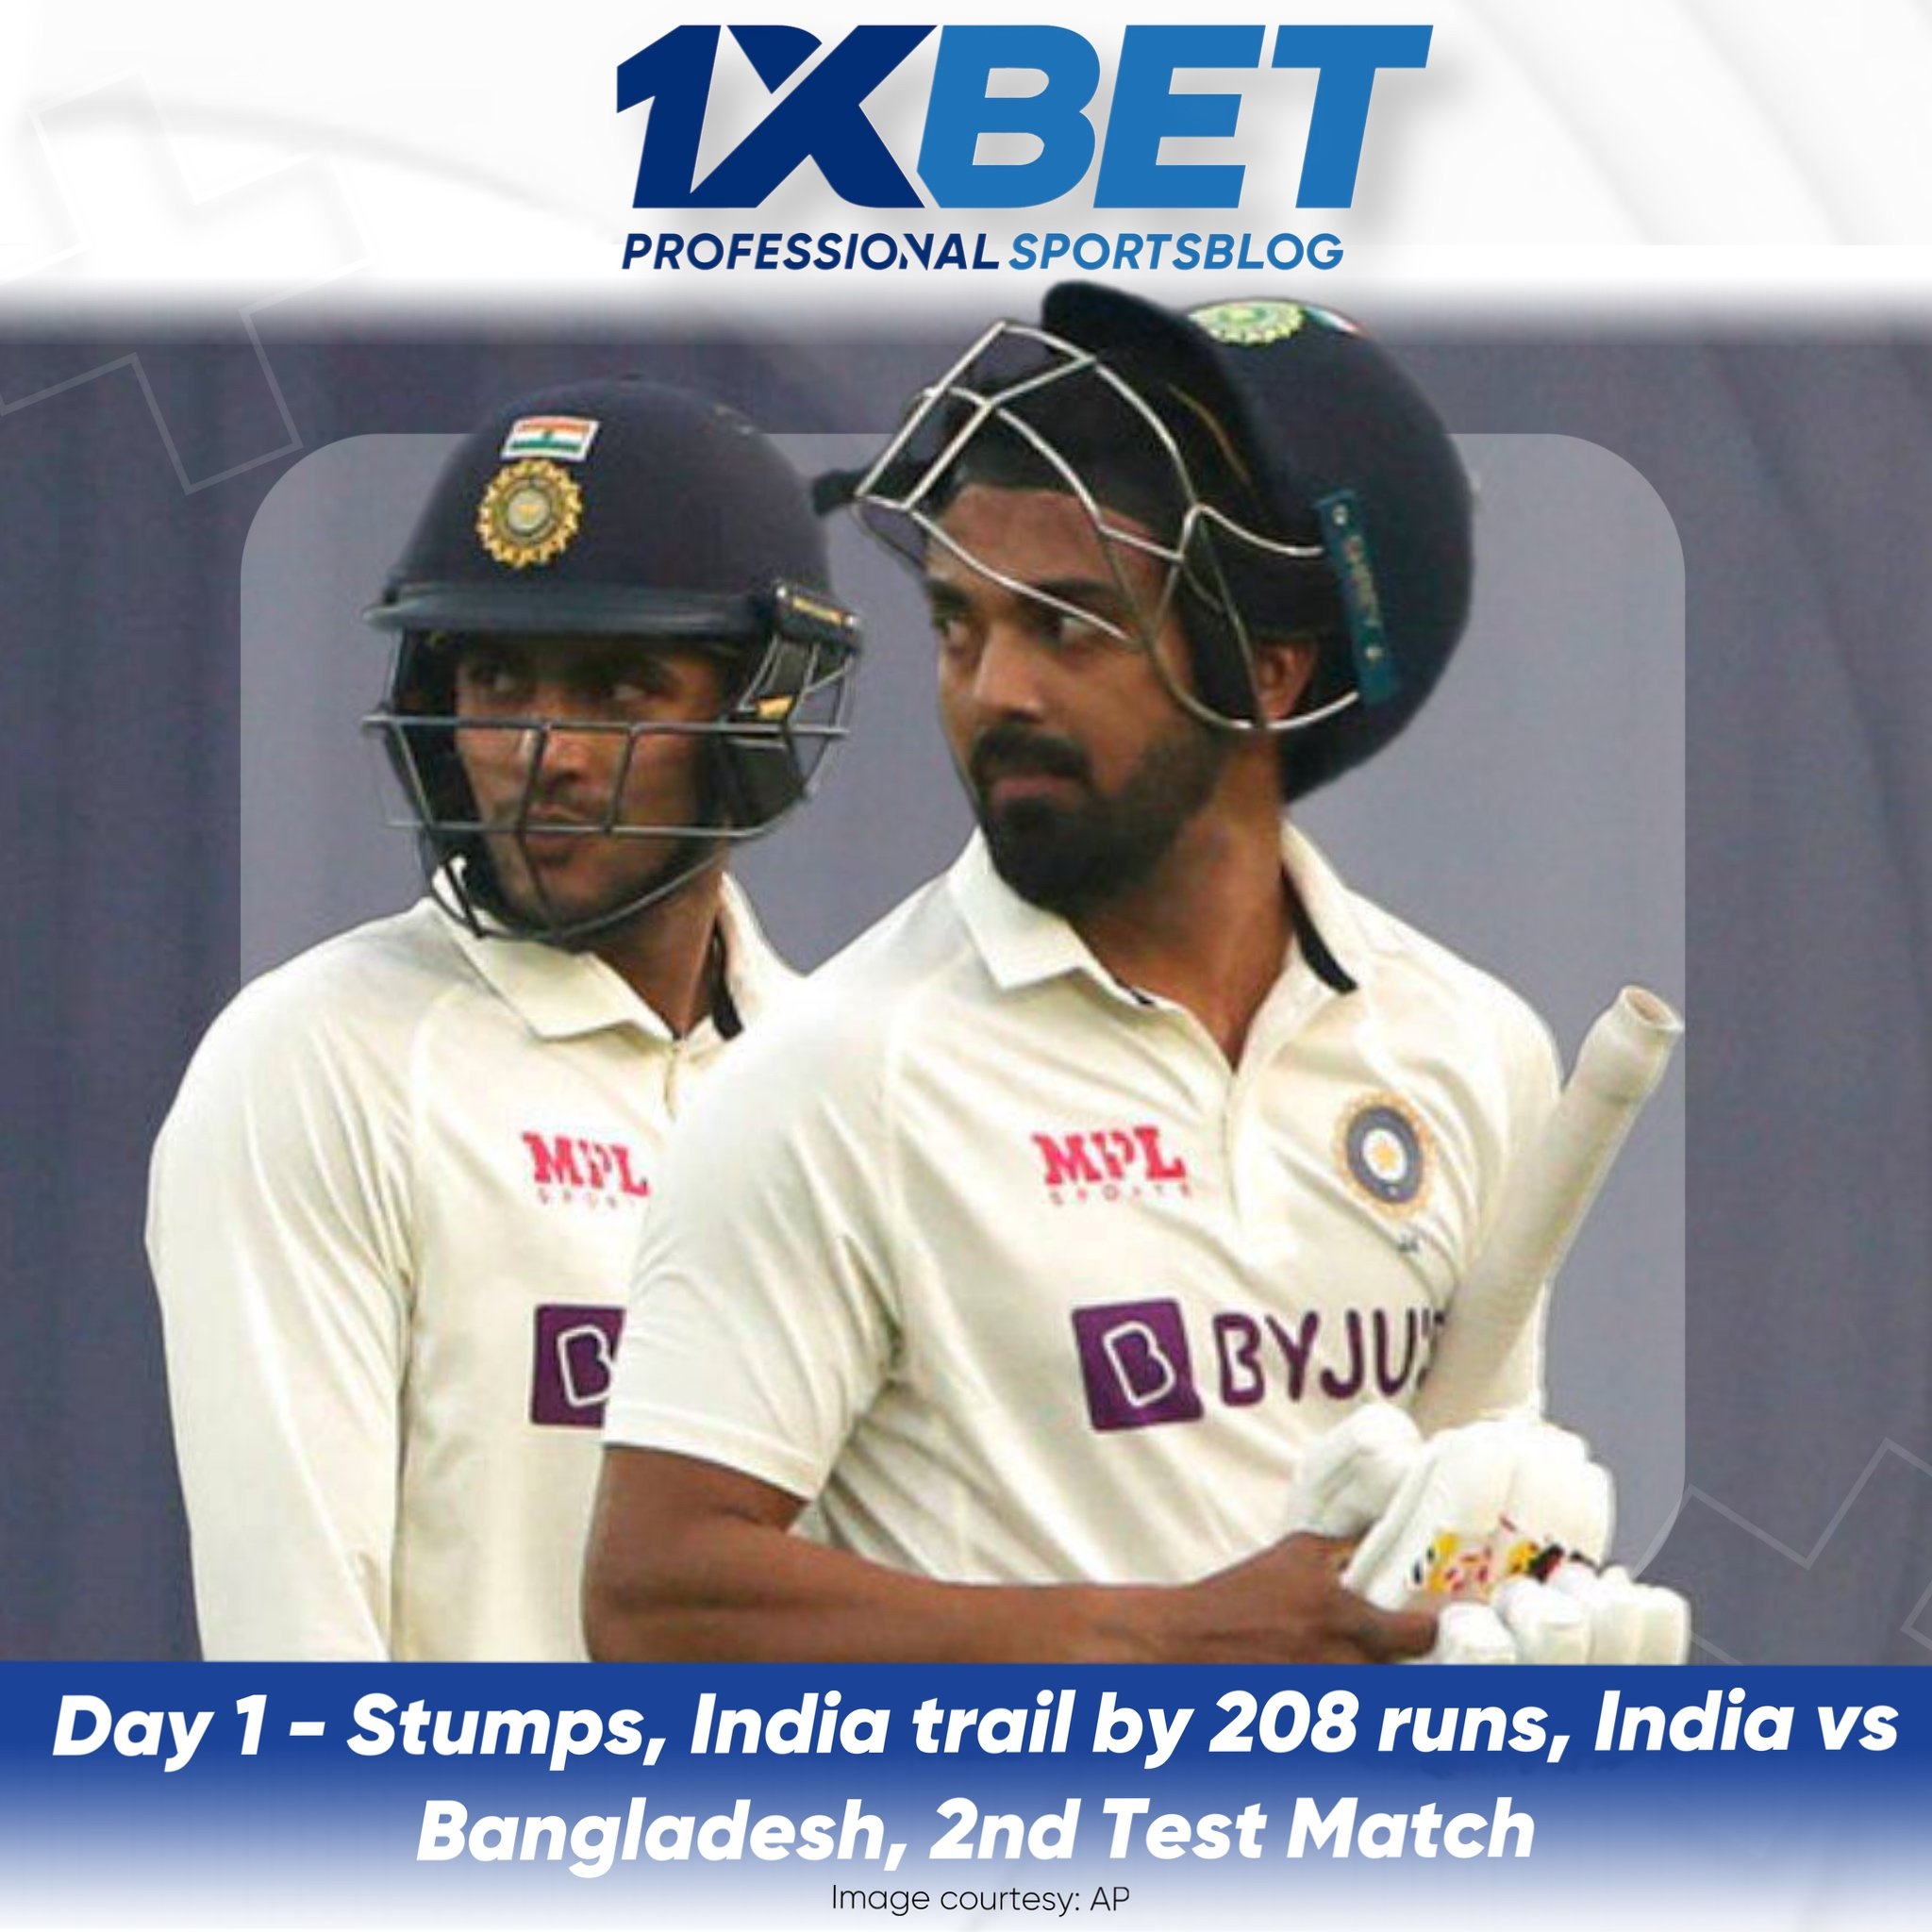 Day 1 - Stumps, India trail by 208 runs, India vs Bangladesh, 2nd Test Match